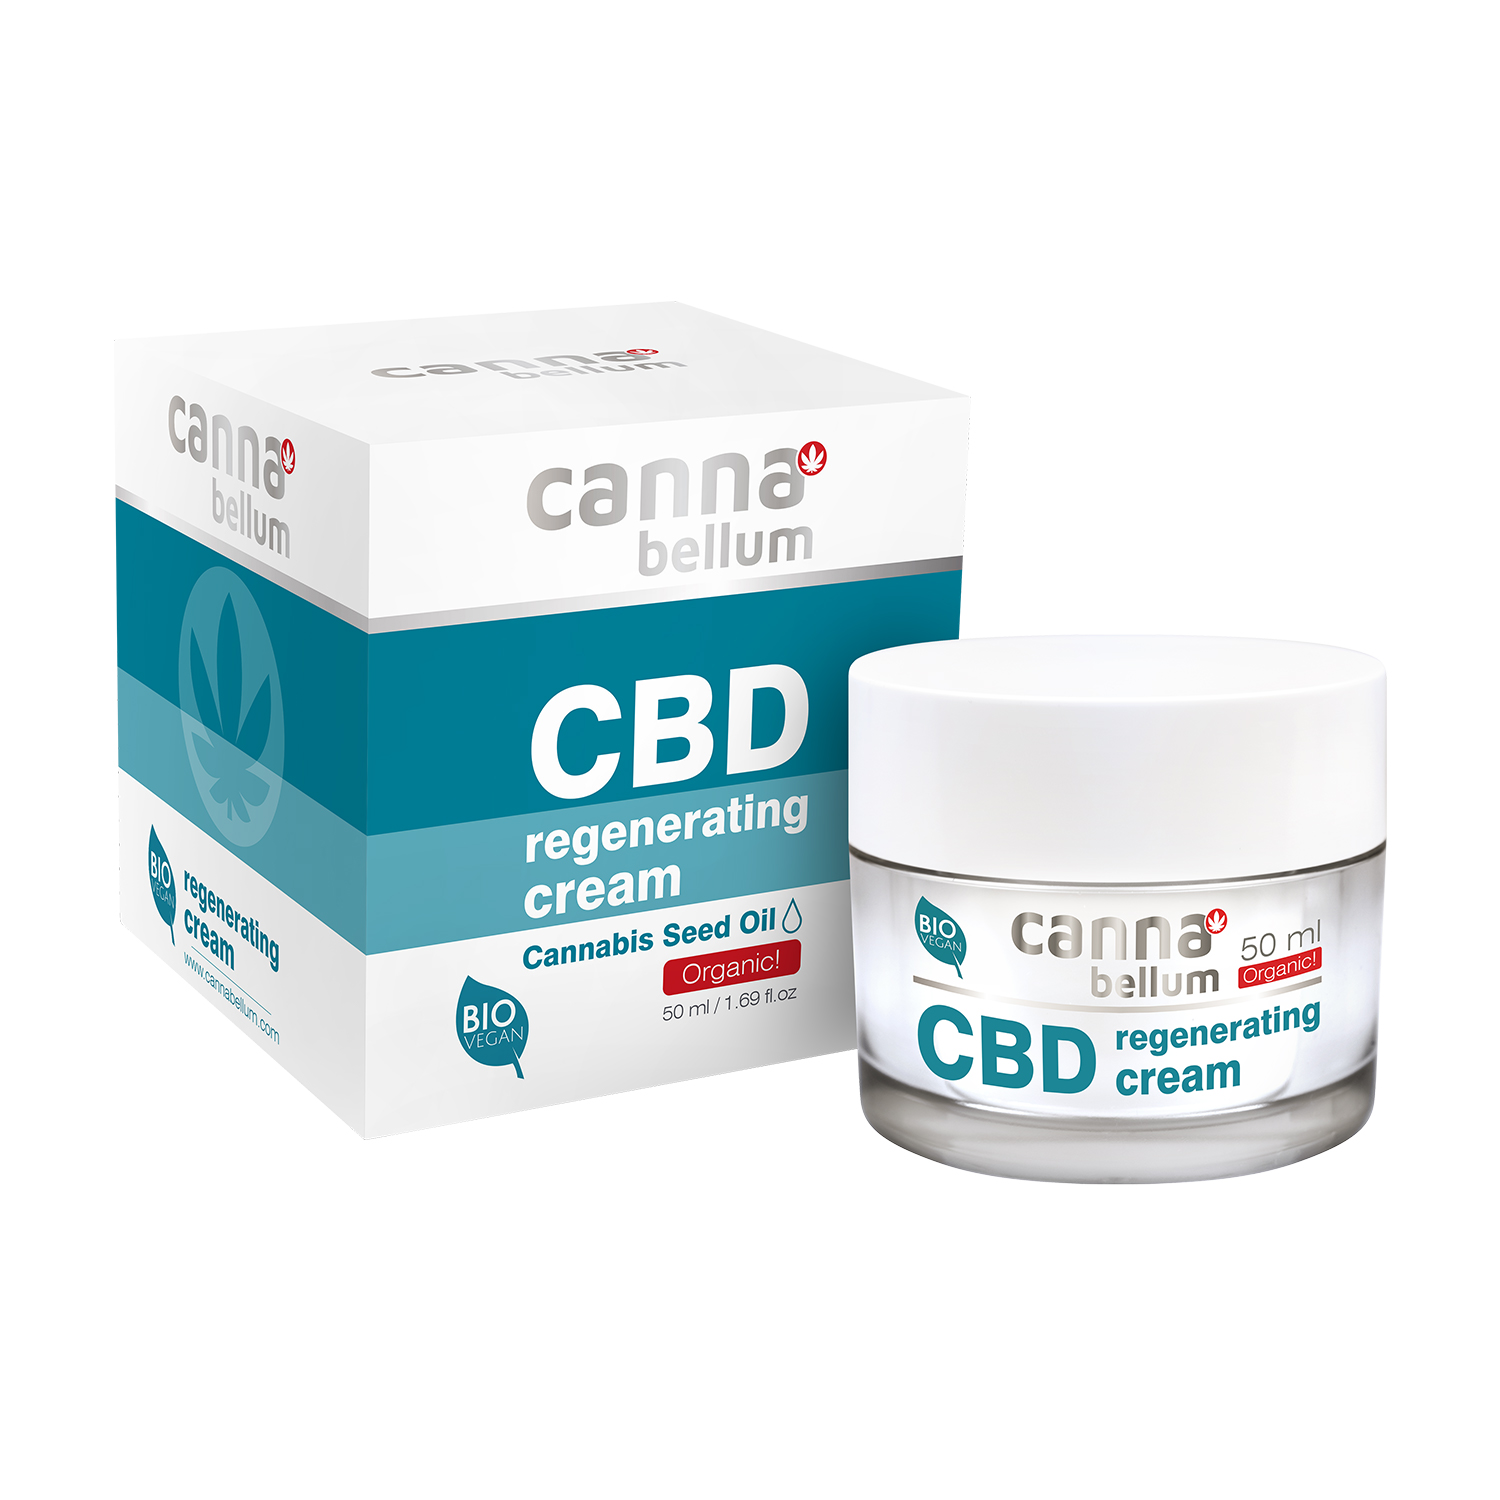 Cannabellum CBD regenerating cream 50ml P1253 komplet WEB 40